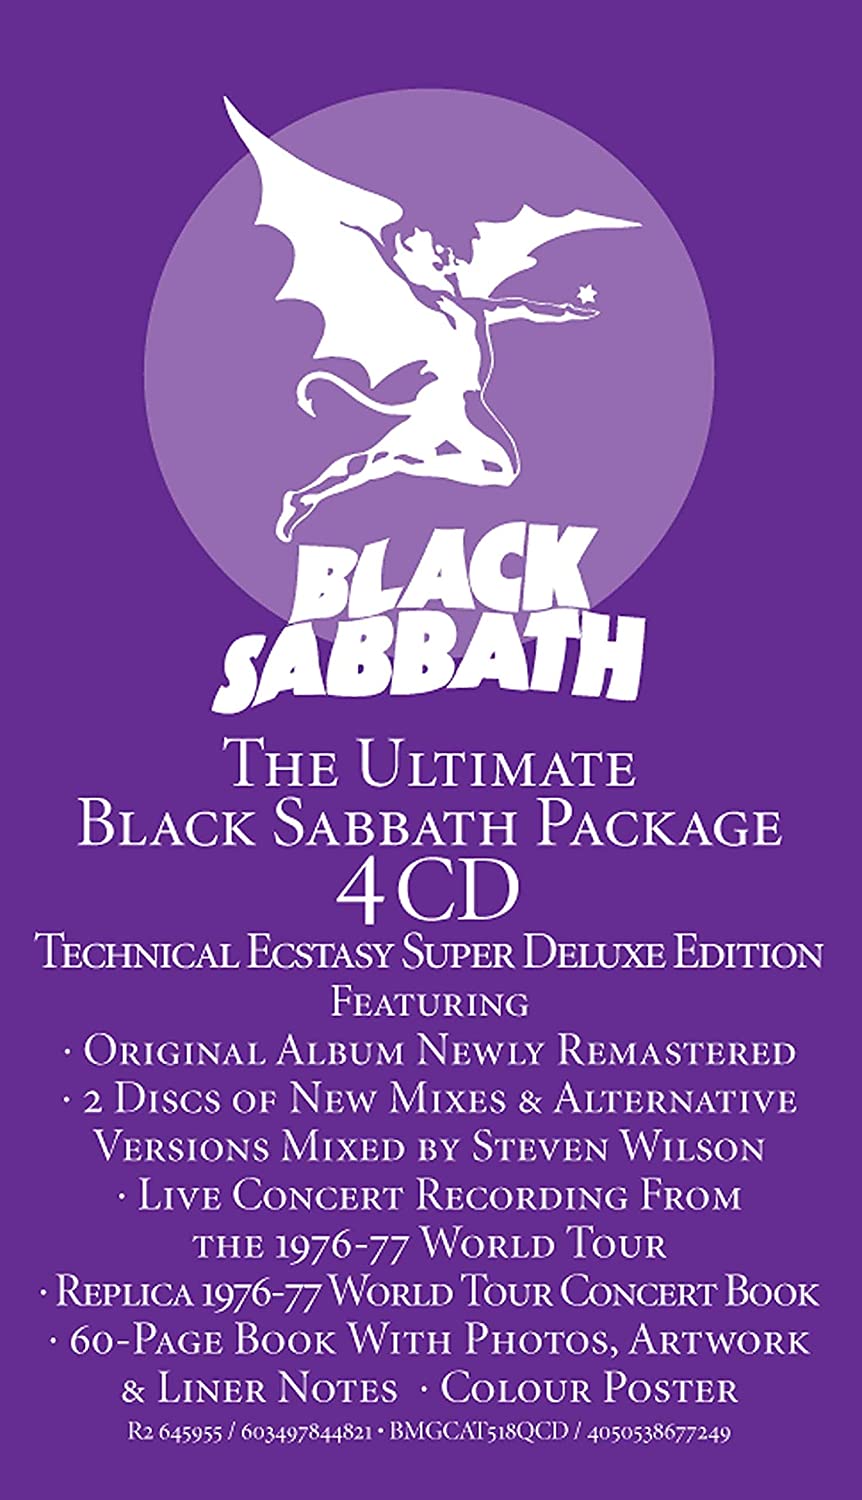 Technical Ecstasy (Super Deluxe [Audio CD]